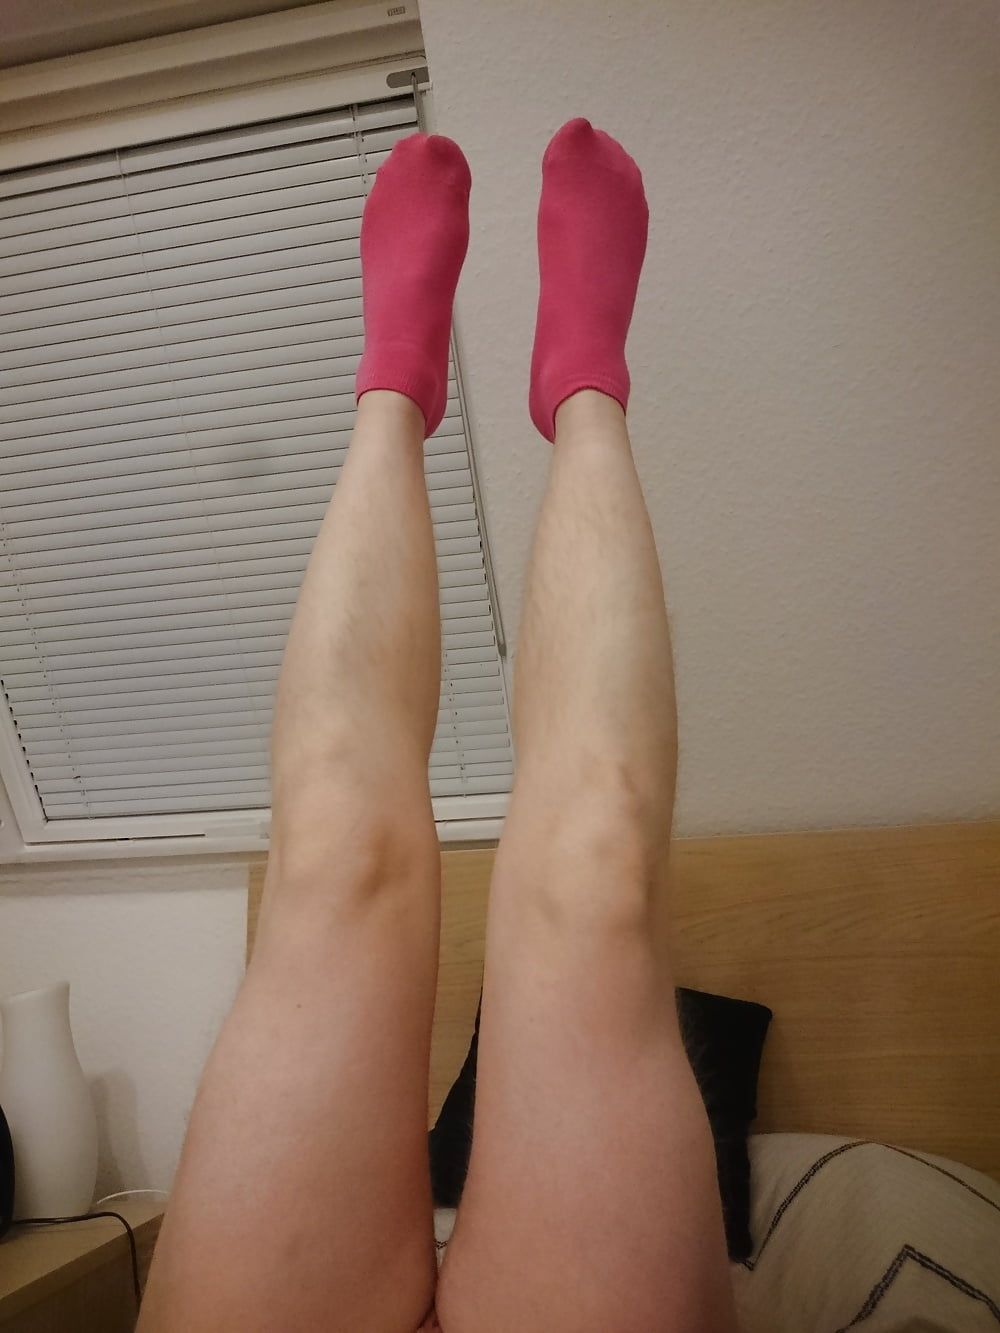 Torn shirt and pink socks #14